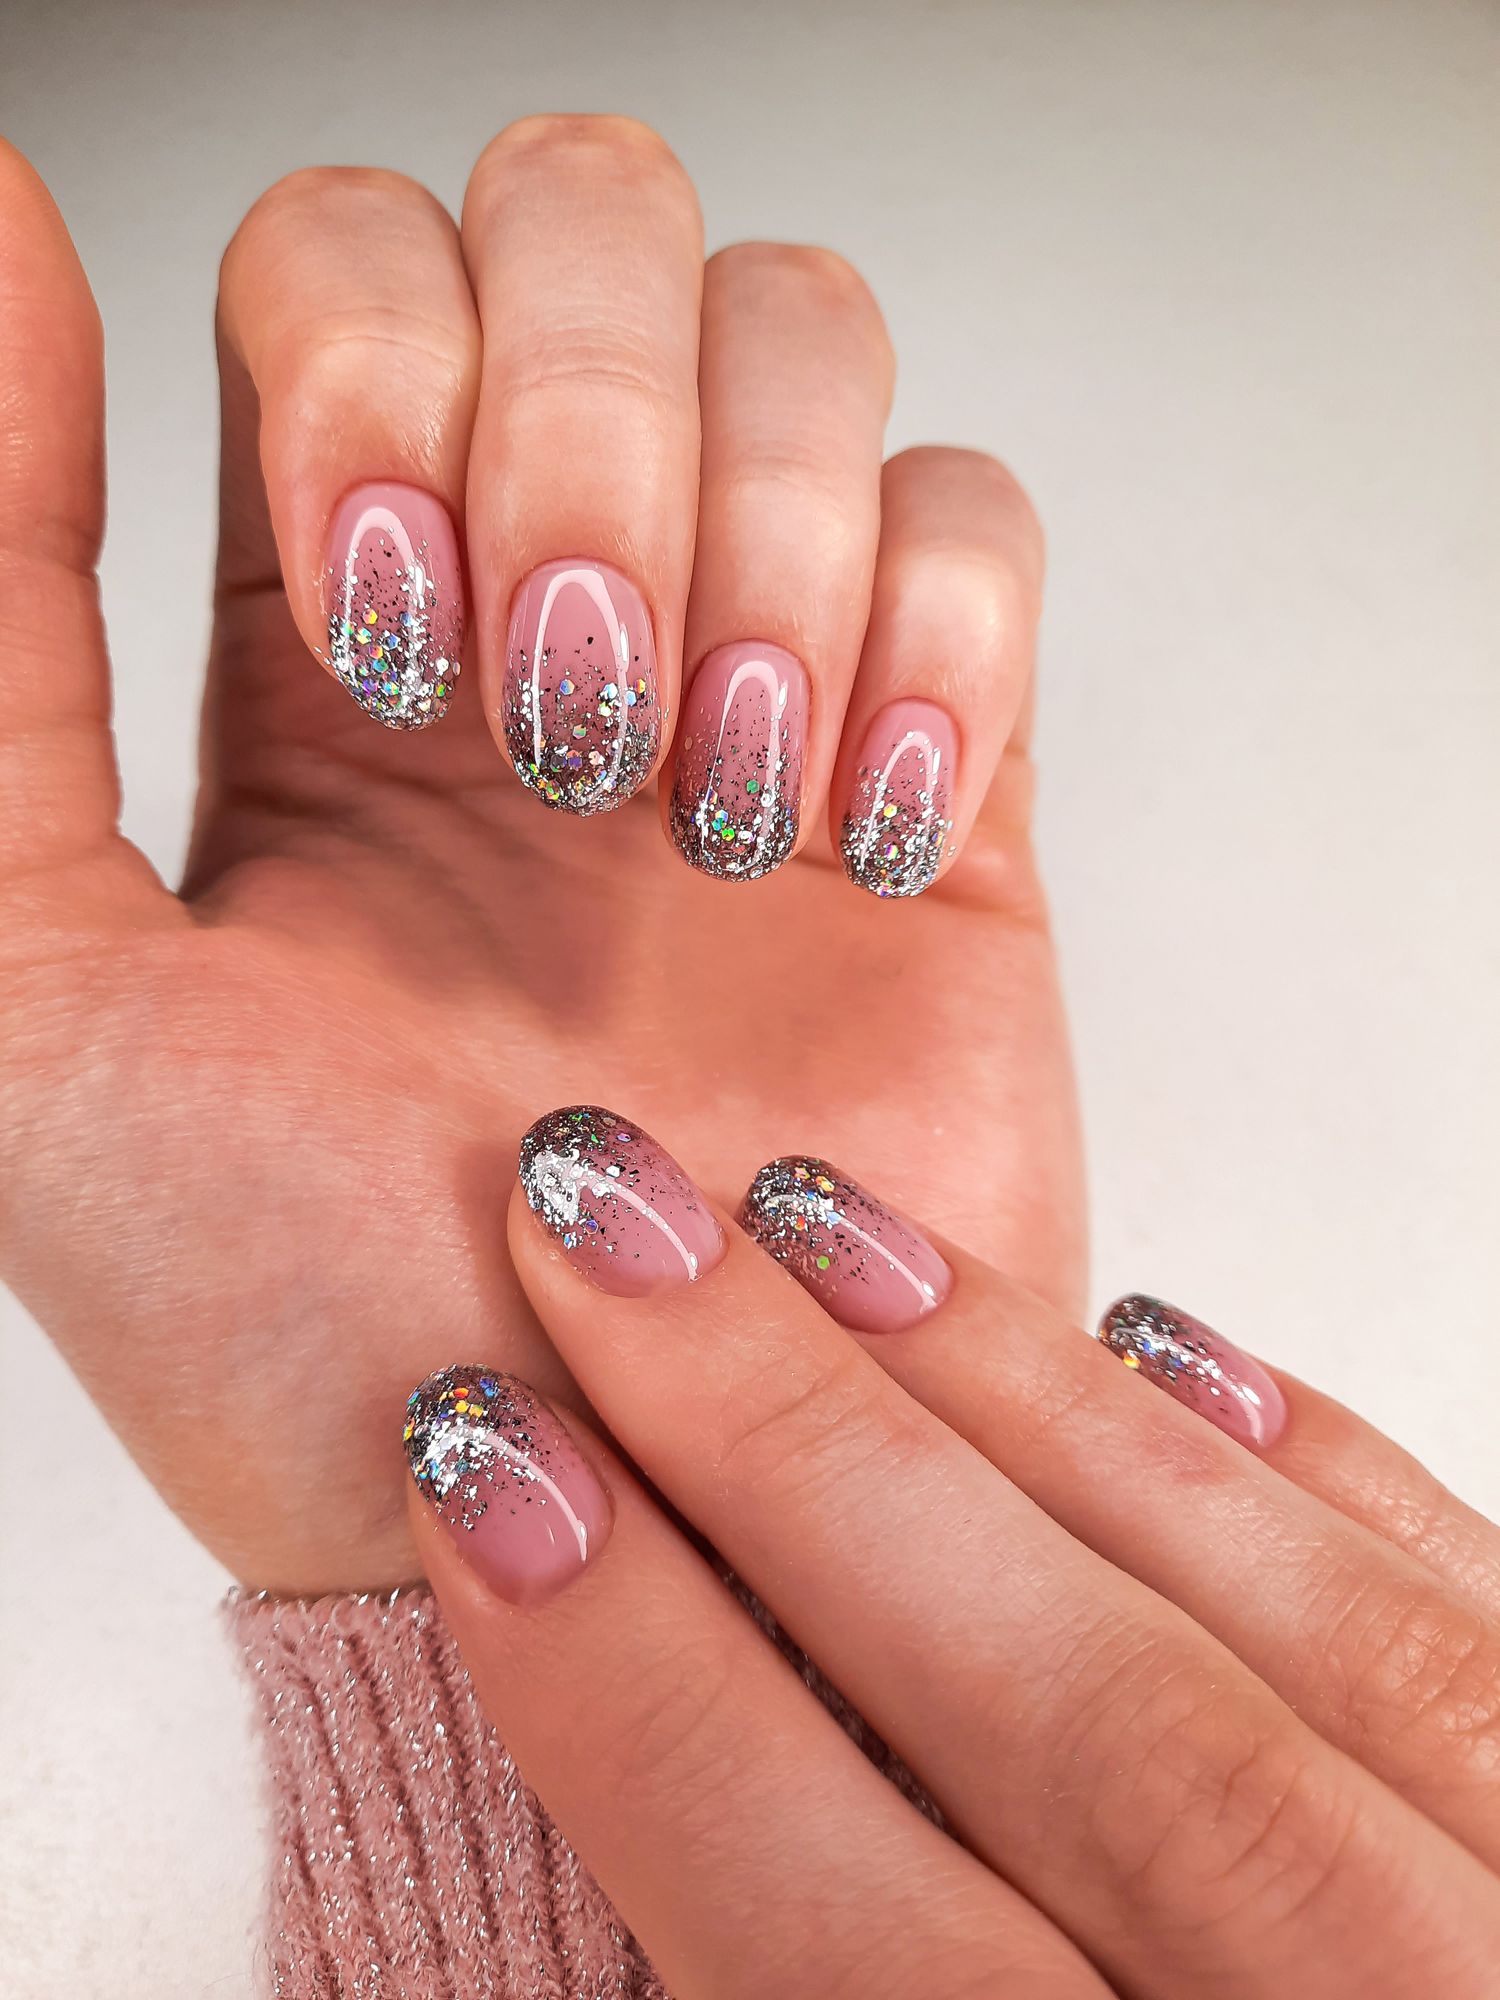 PHIBA - Glitter nail designs for short nails for spring 2019! . . . . . # manicure #transformation #stylish #glam #effect #simple #hottestidea #cool  #lovetocreate #phibasalon #phibateam #fashion #create #greatideas | Facebook